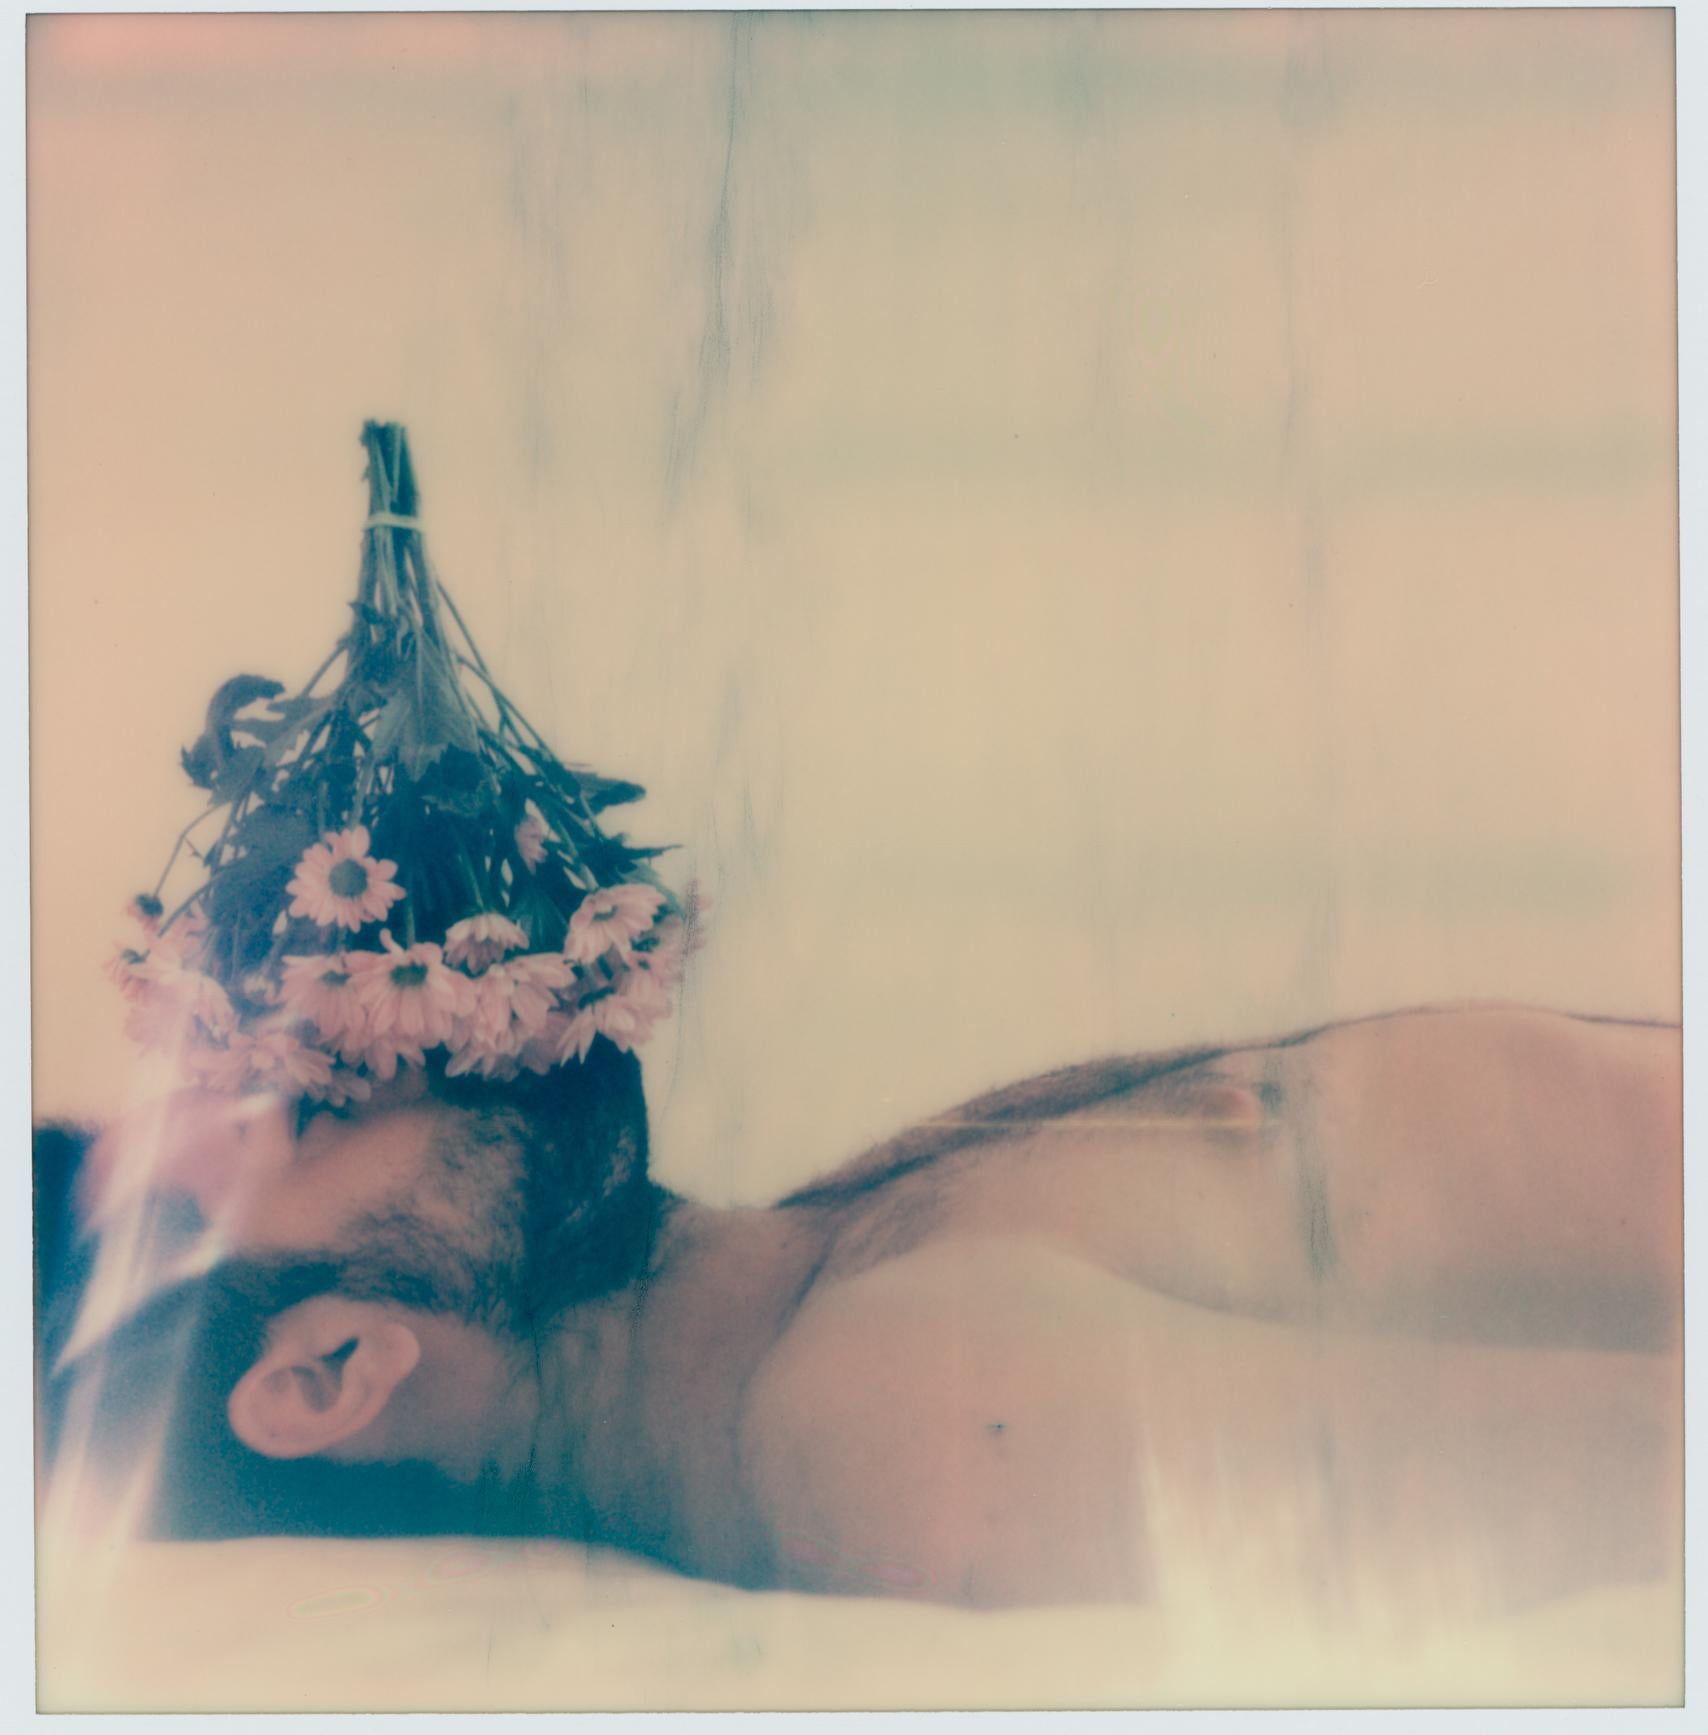 THE GROUND - SELF PORTRAIT - XXIe siècle, contemporain, Polaroid, hommes, amour